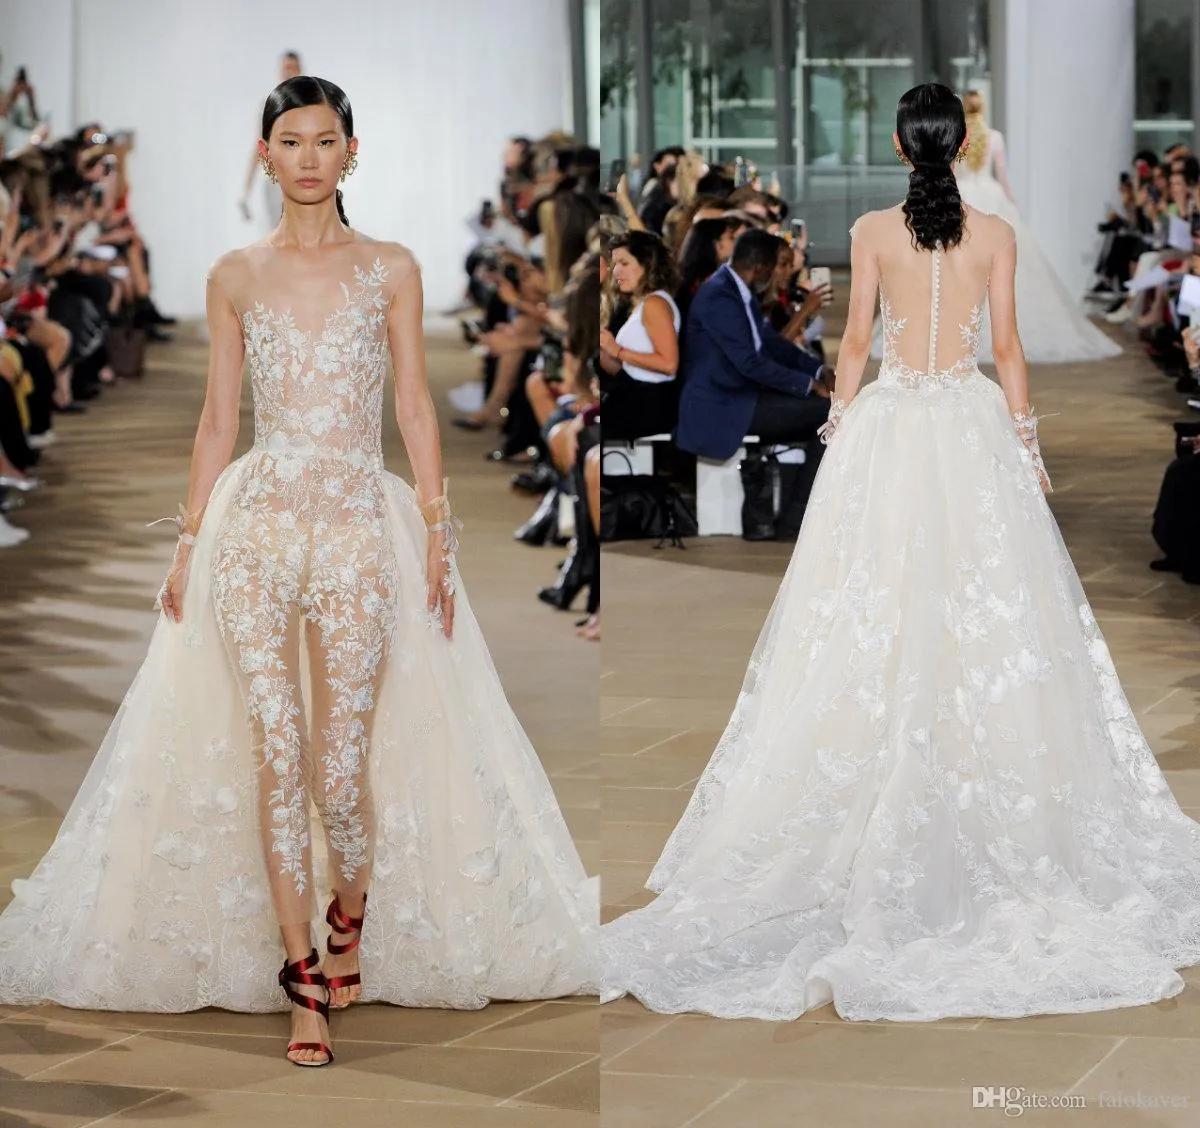 2019 Jumpsuits Wedding Dresses Sheer Jewel Neck Lace Appliqued Bridal Gown With Detachable Train Boho Wedding Dress Cheap Vestidos De Novia